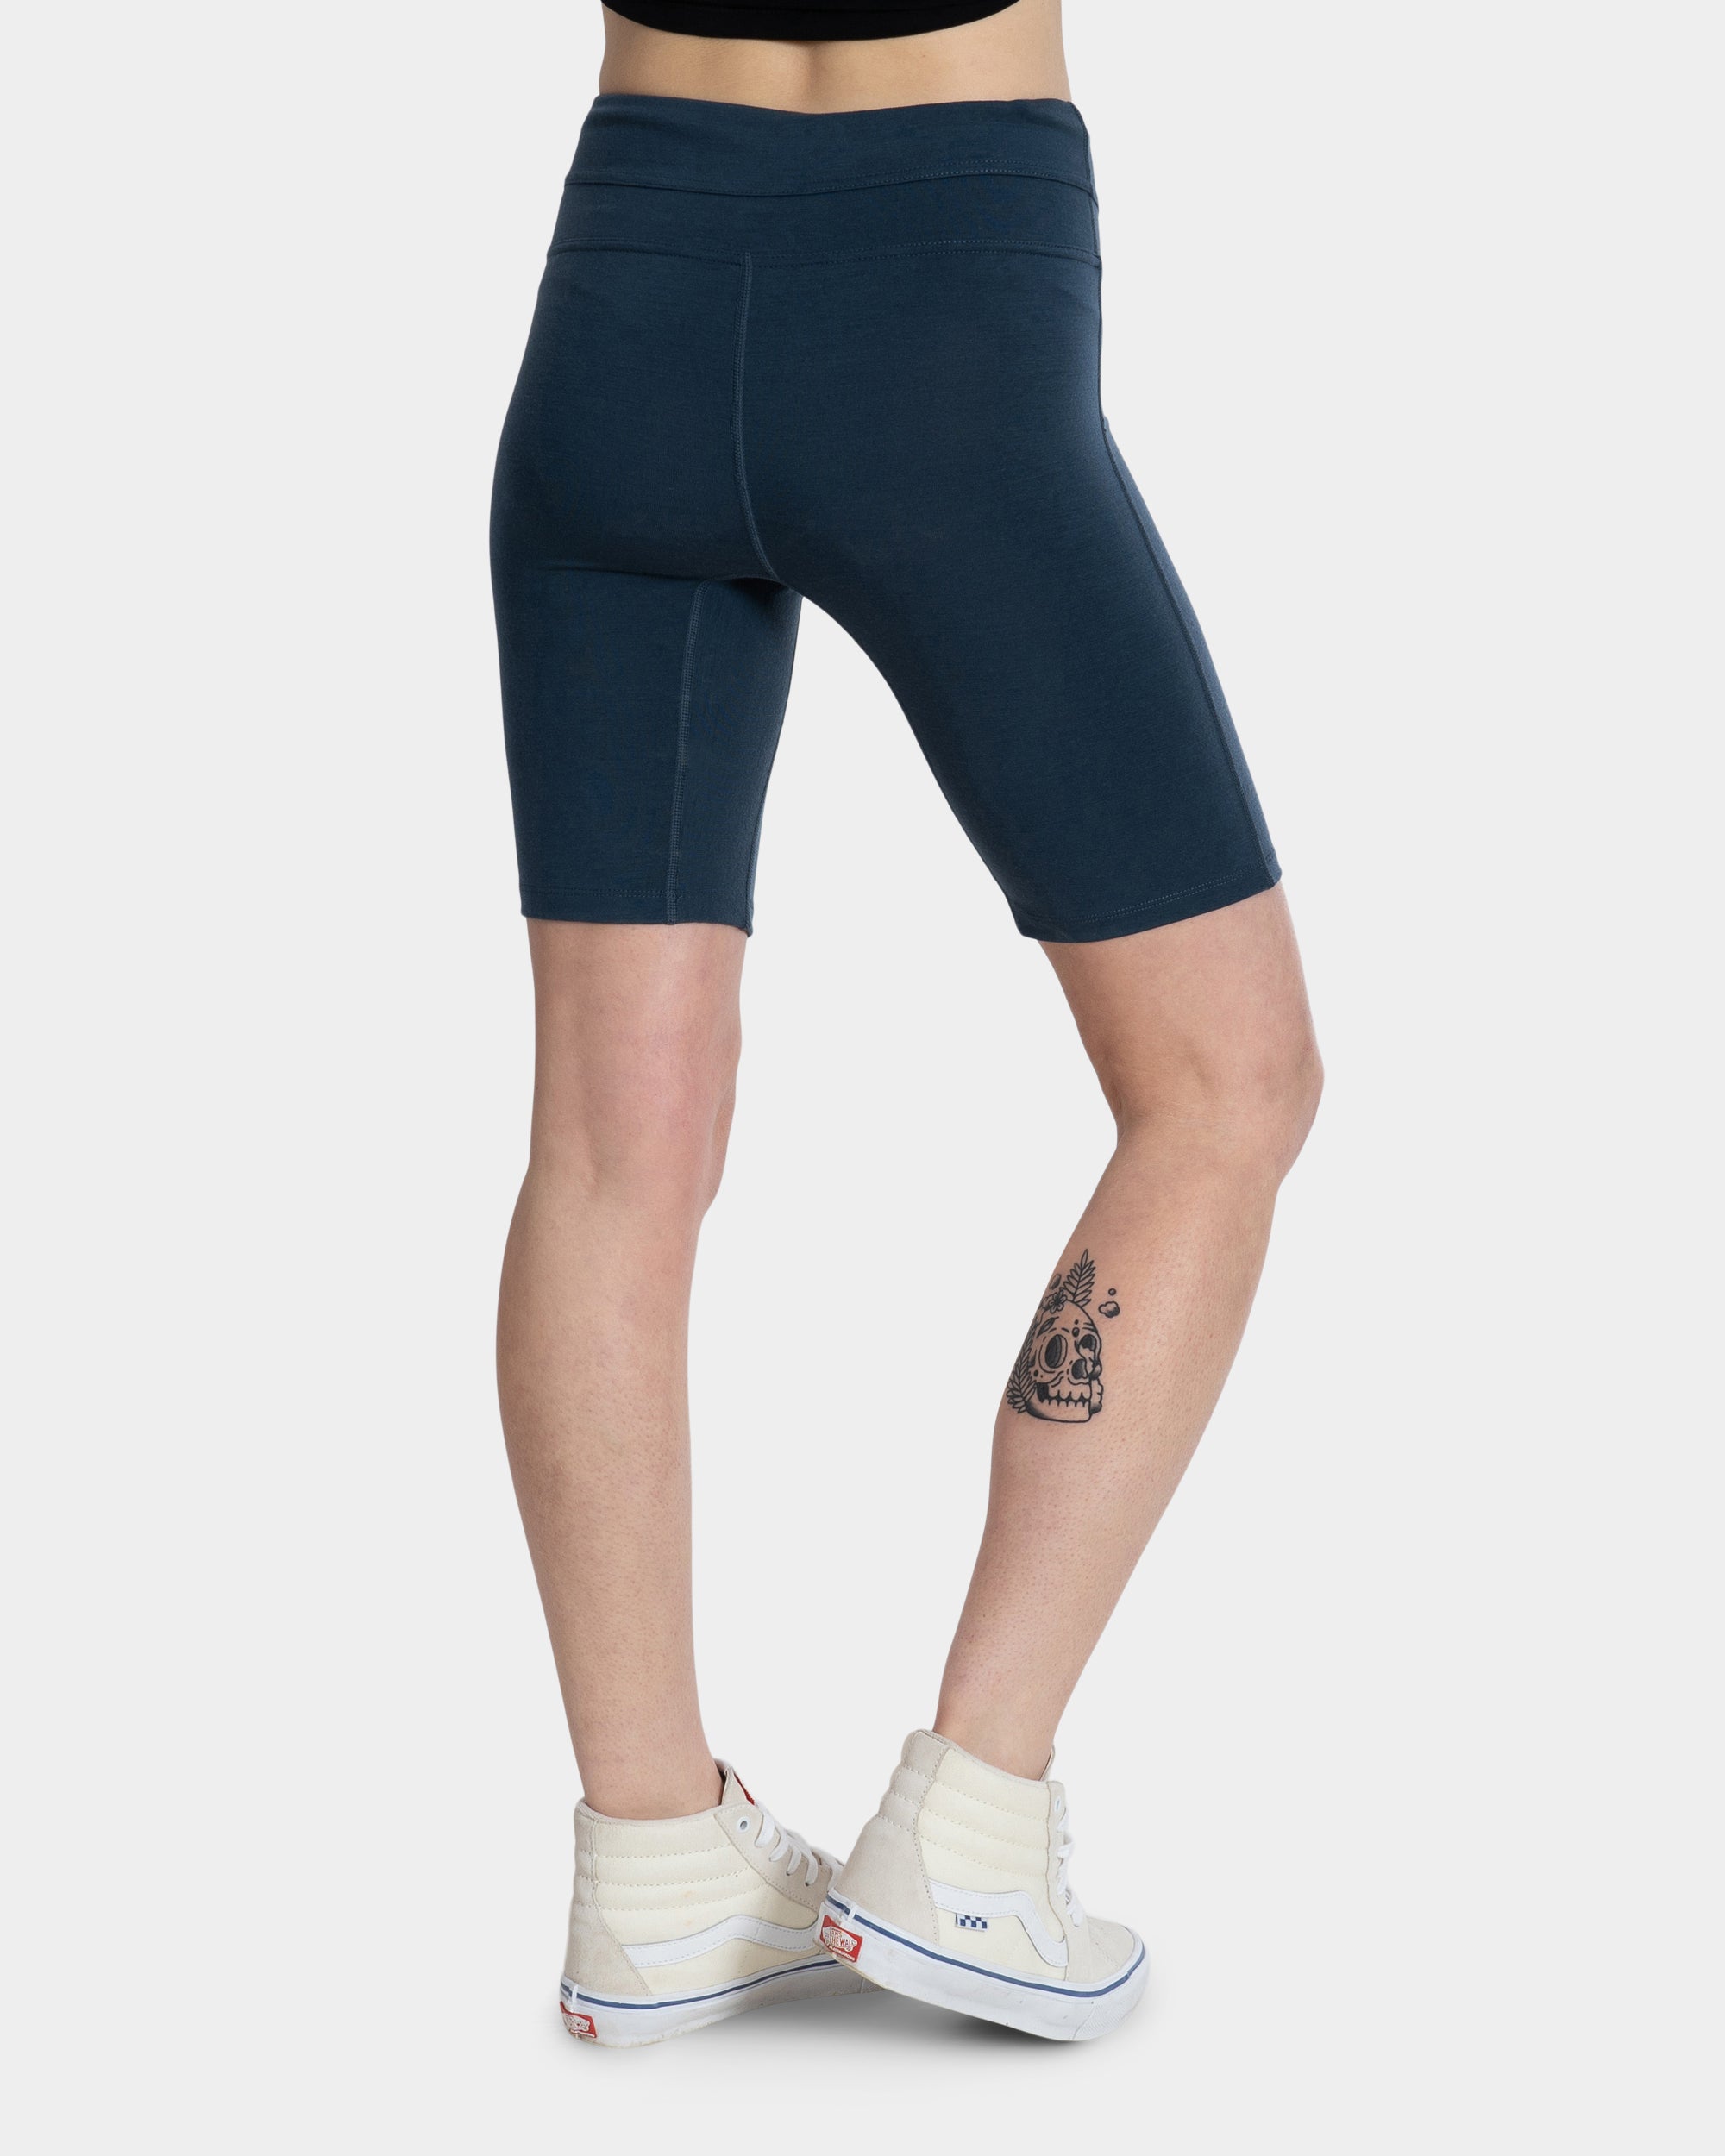 Bike Short – Woolly Clothing Co